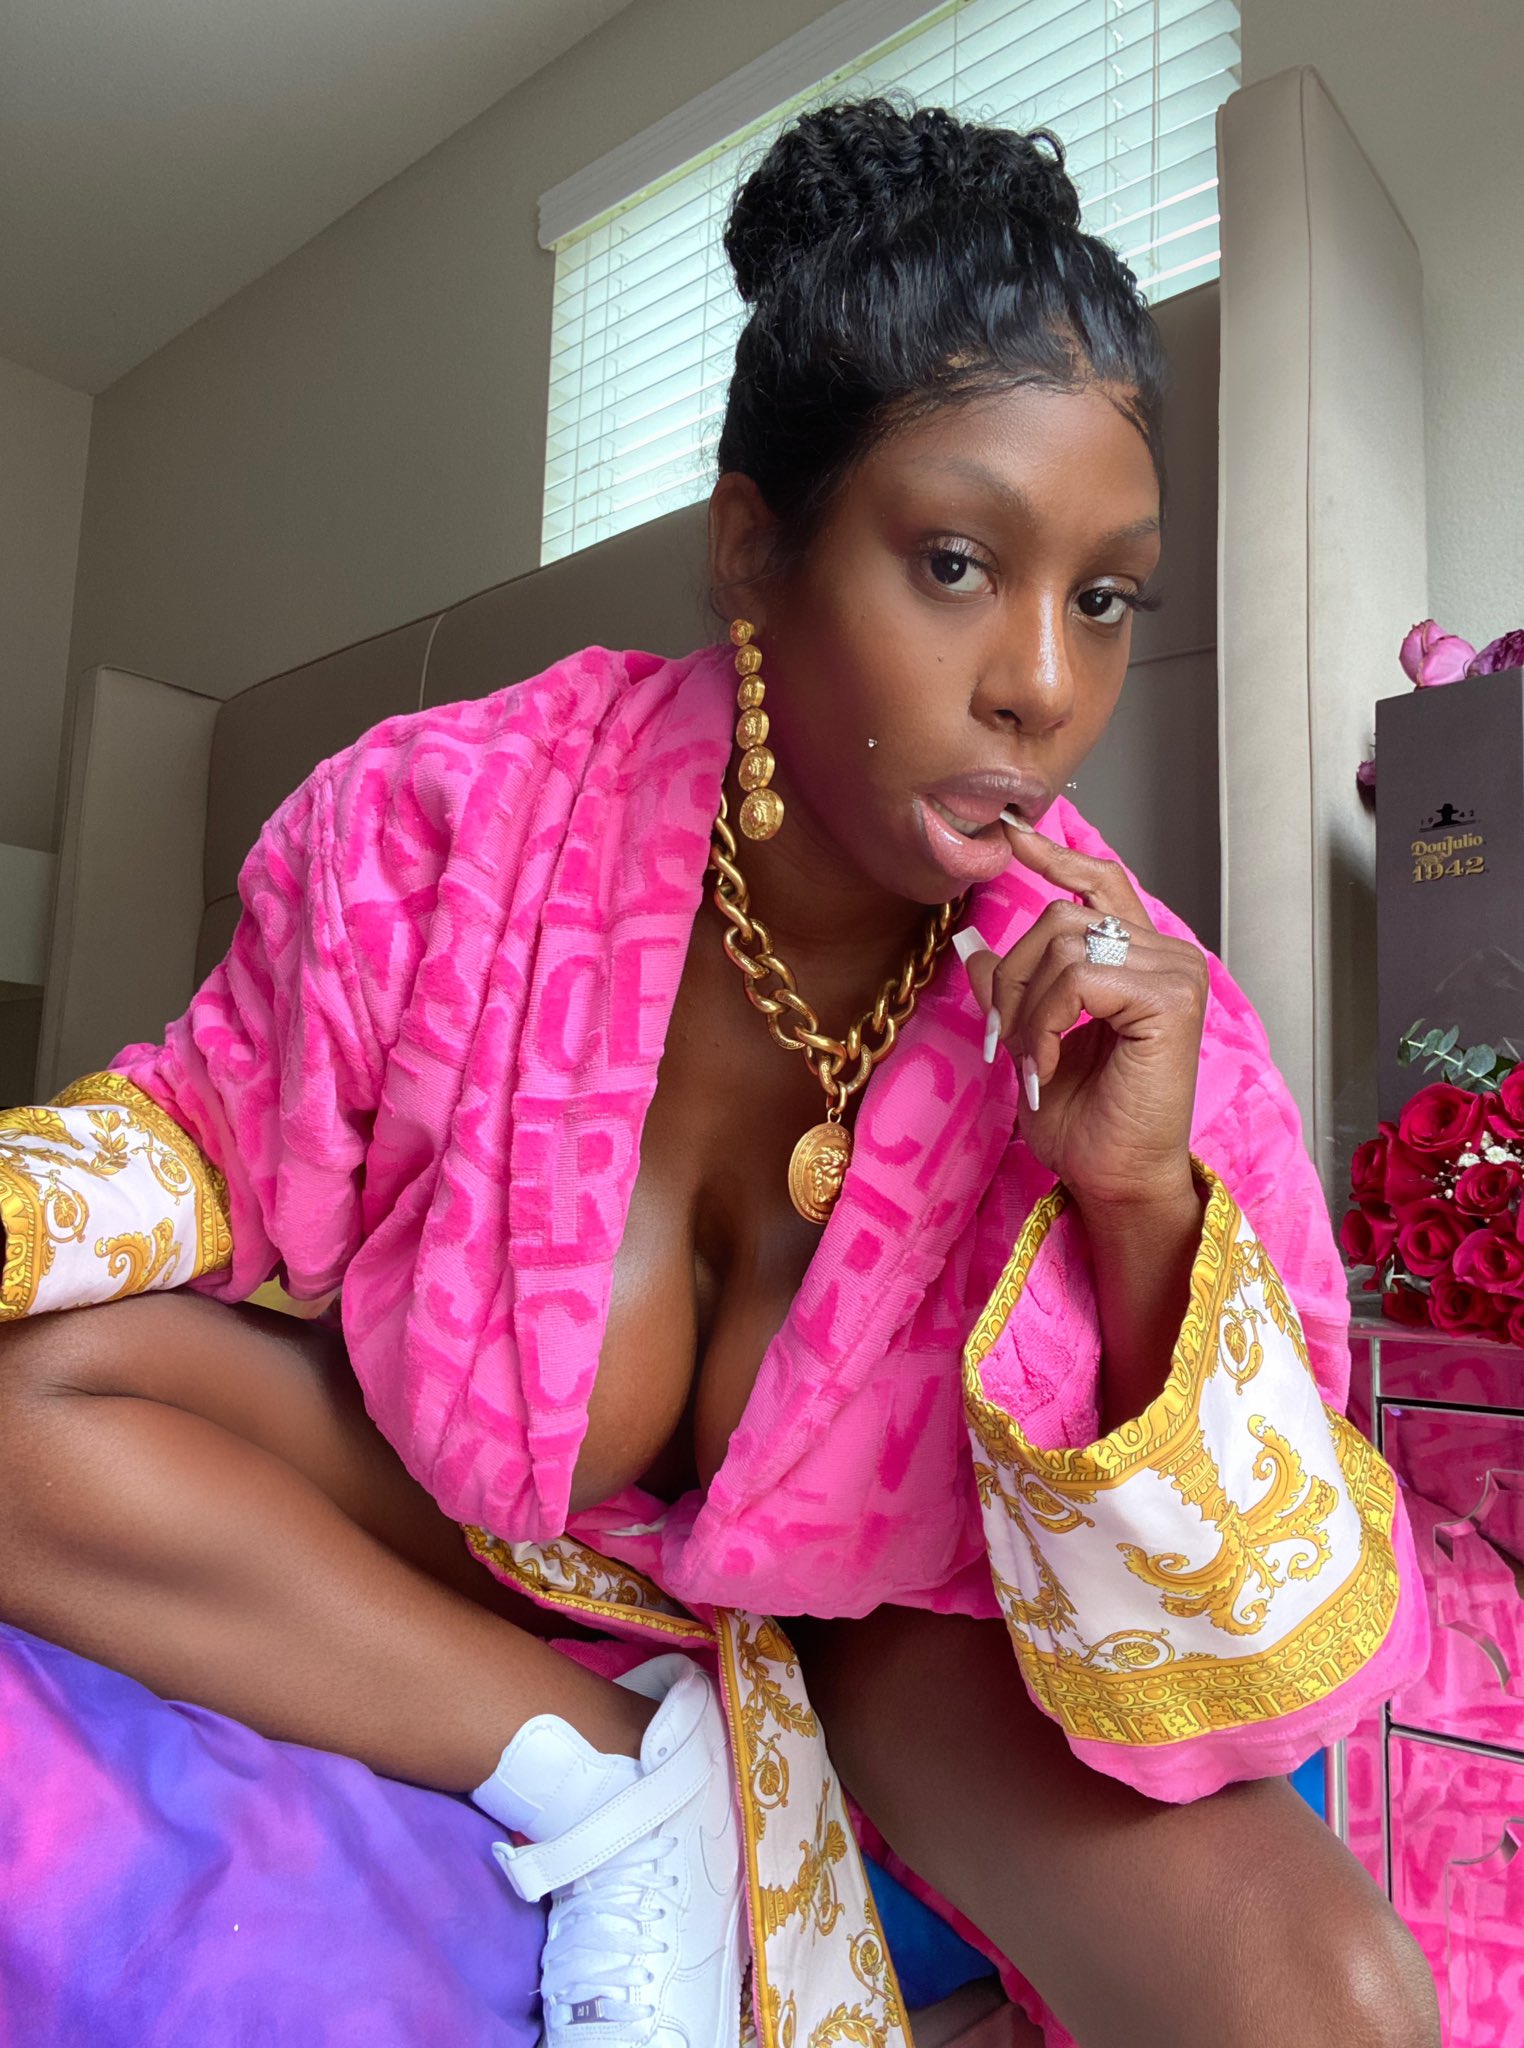 Pink Black Women Porn Star - Ebony Mystique NYC 11/28-12/2 on Twitter: \